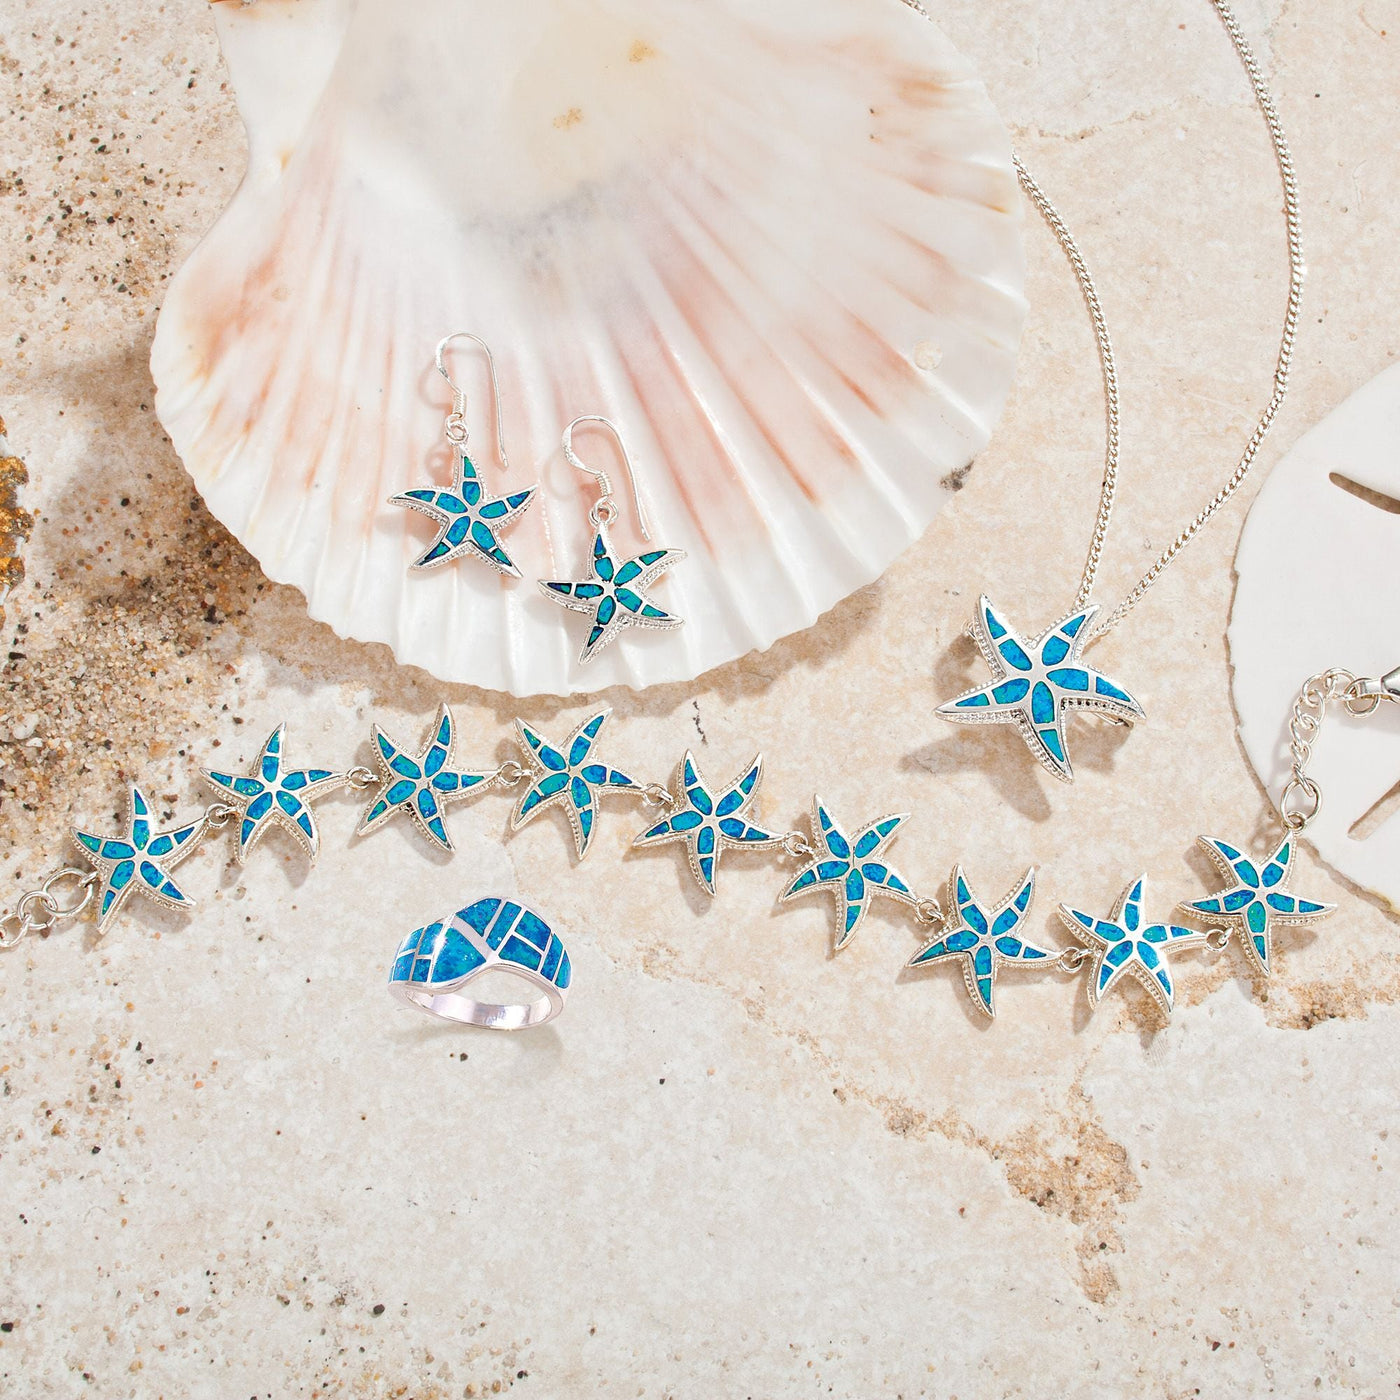 Blue Opal Starfish Bracelet